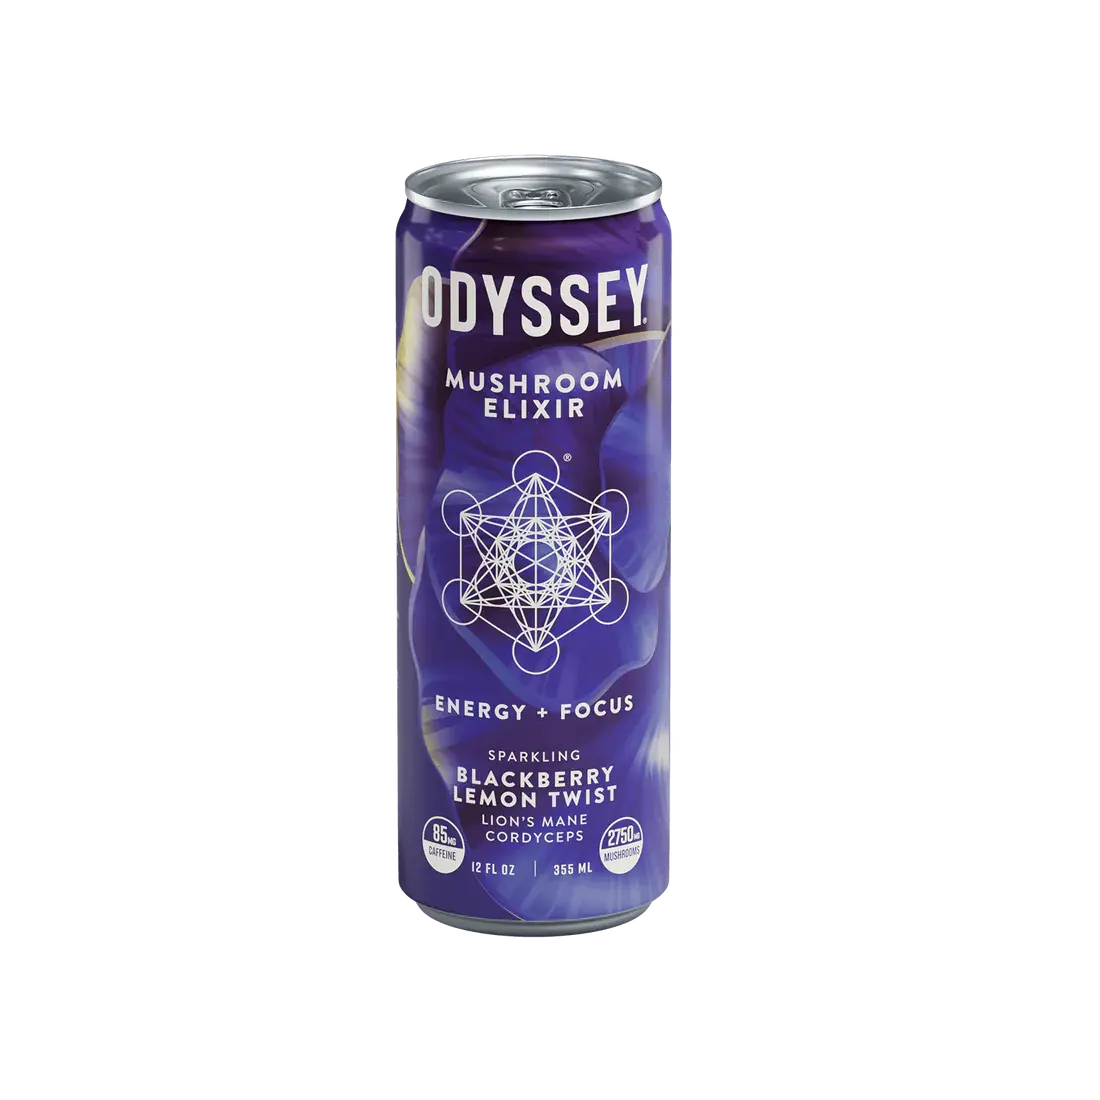 Odyssey Elixir Energy Drink Siesta G Dispensary Siesta-G